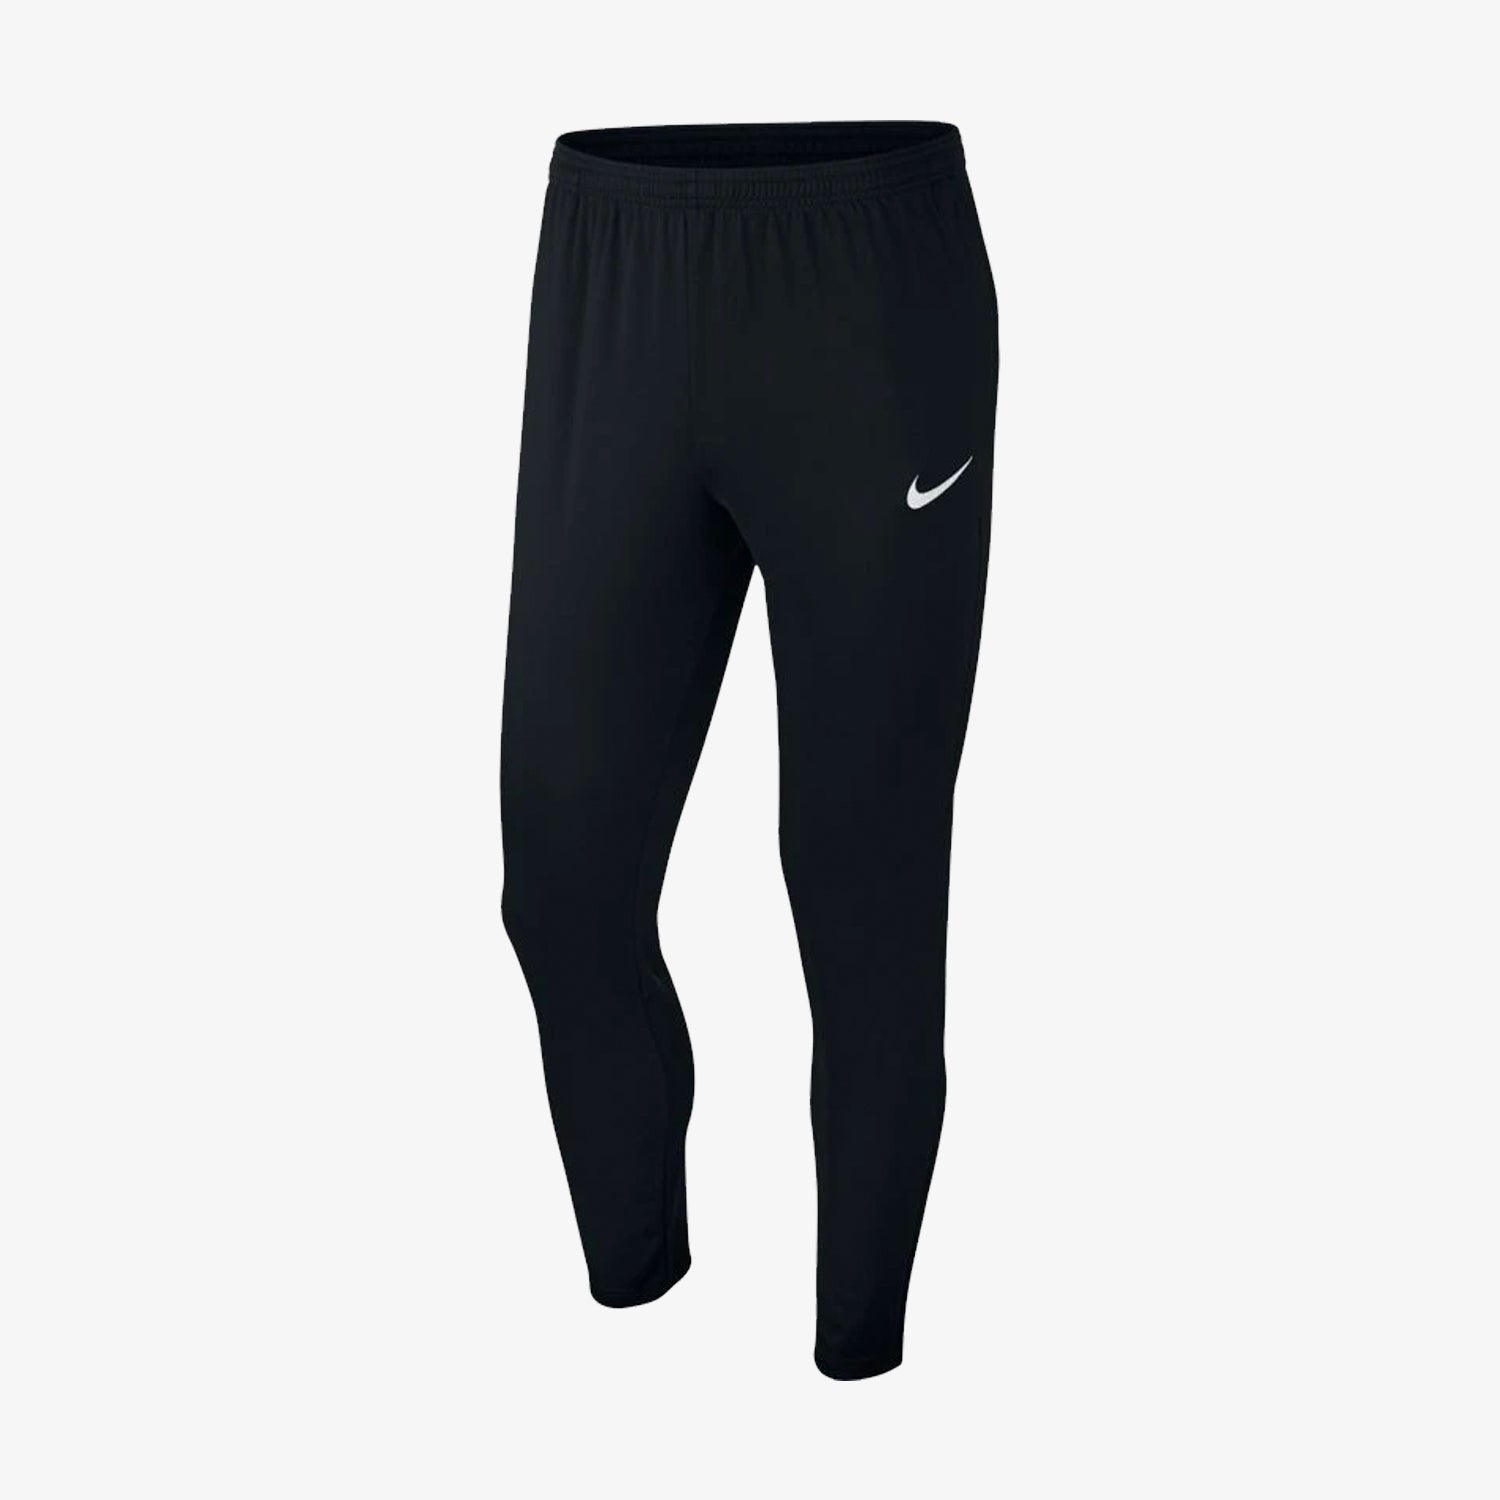 Nike Academy Men's Dri-FIT Soccer Pants.